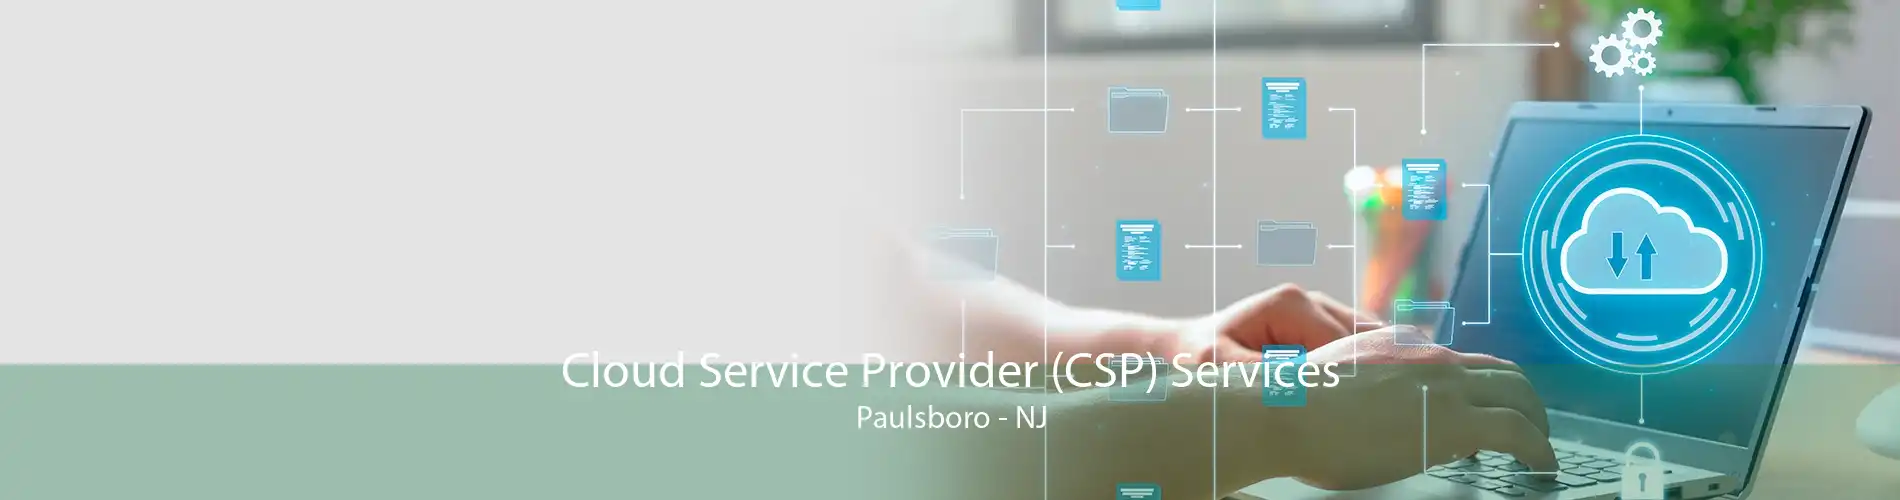 Cloud Service Provider (CSP) Services Paulsboro - NJ